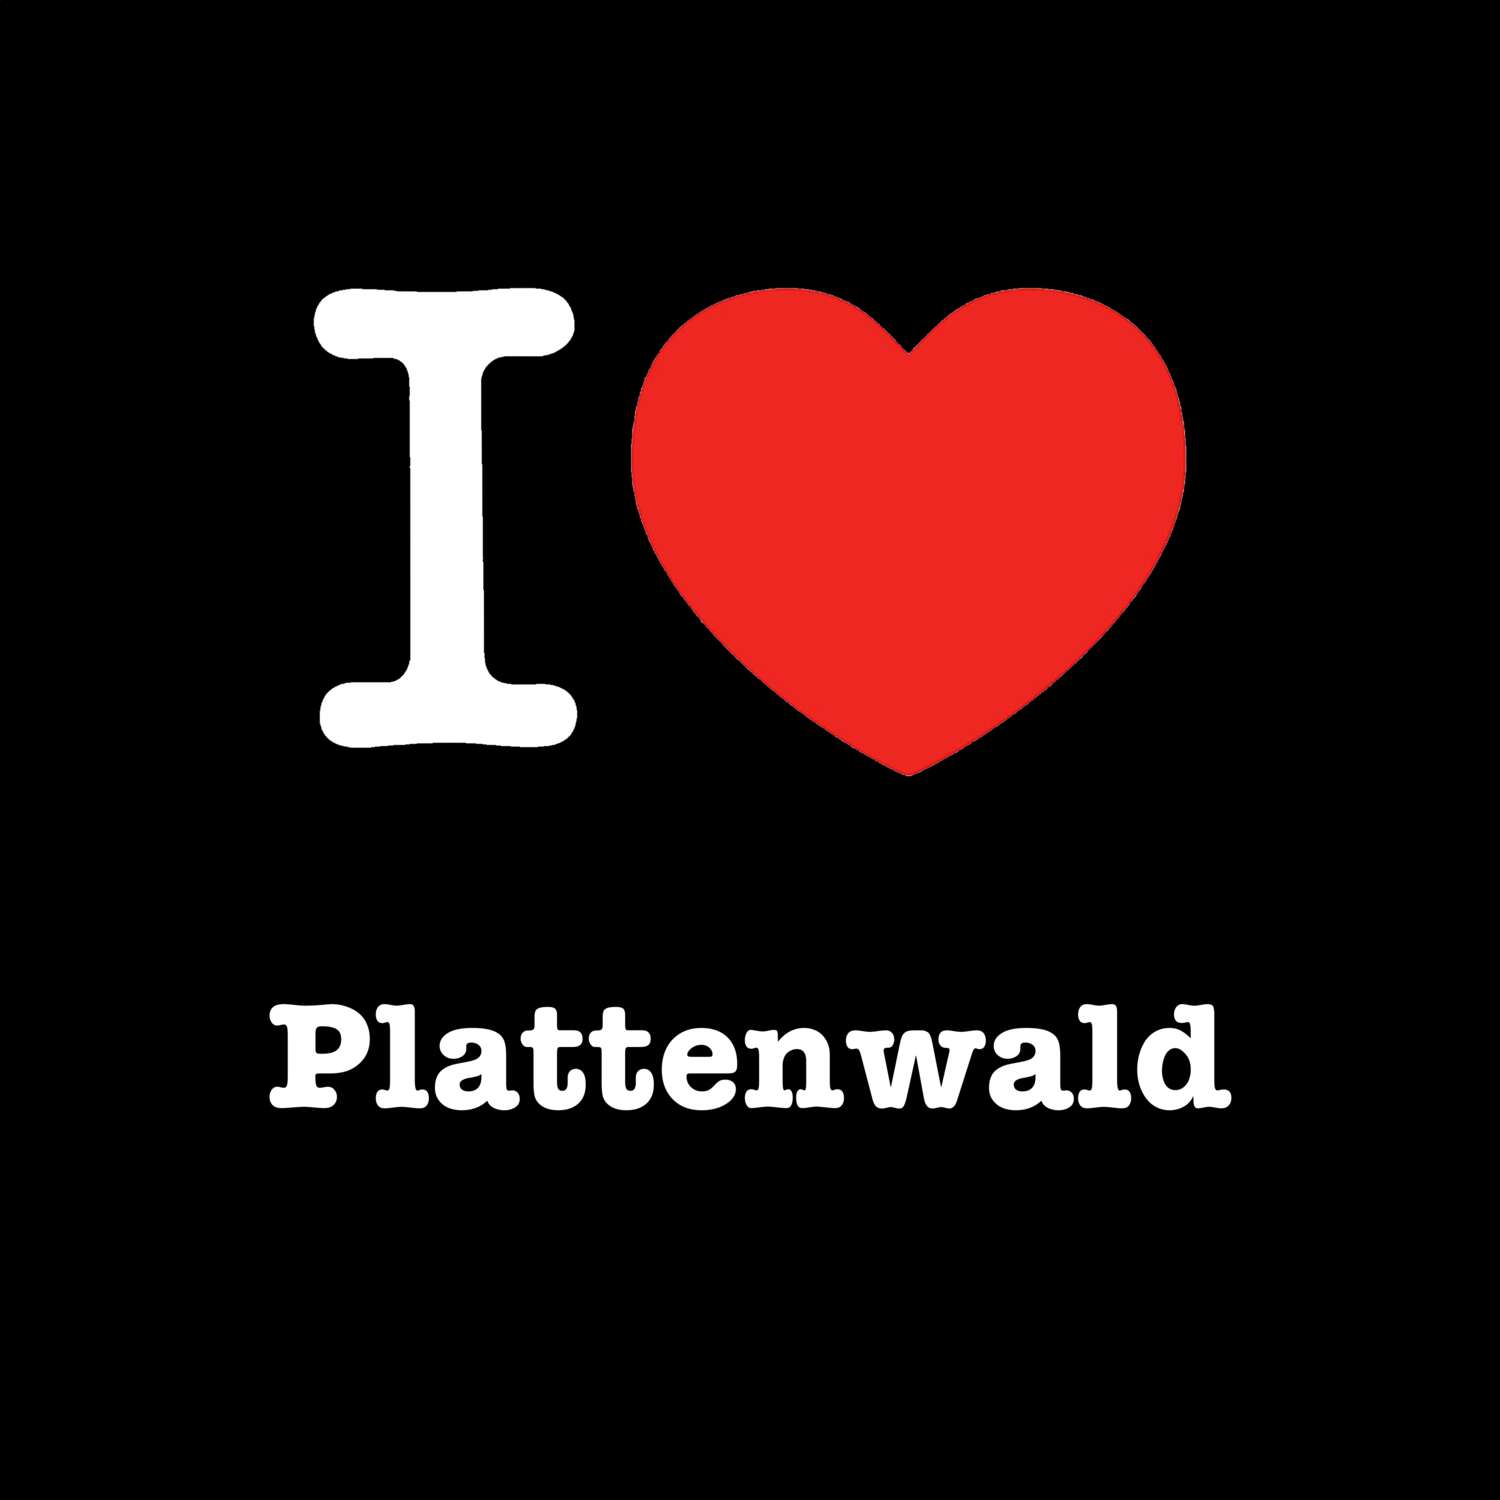 Plattenwald T-Shirt »I love«